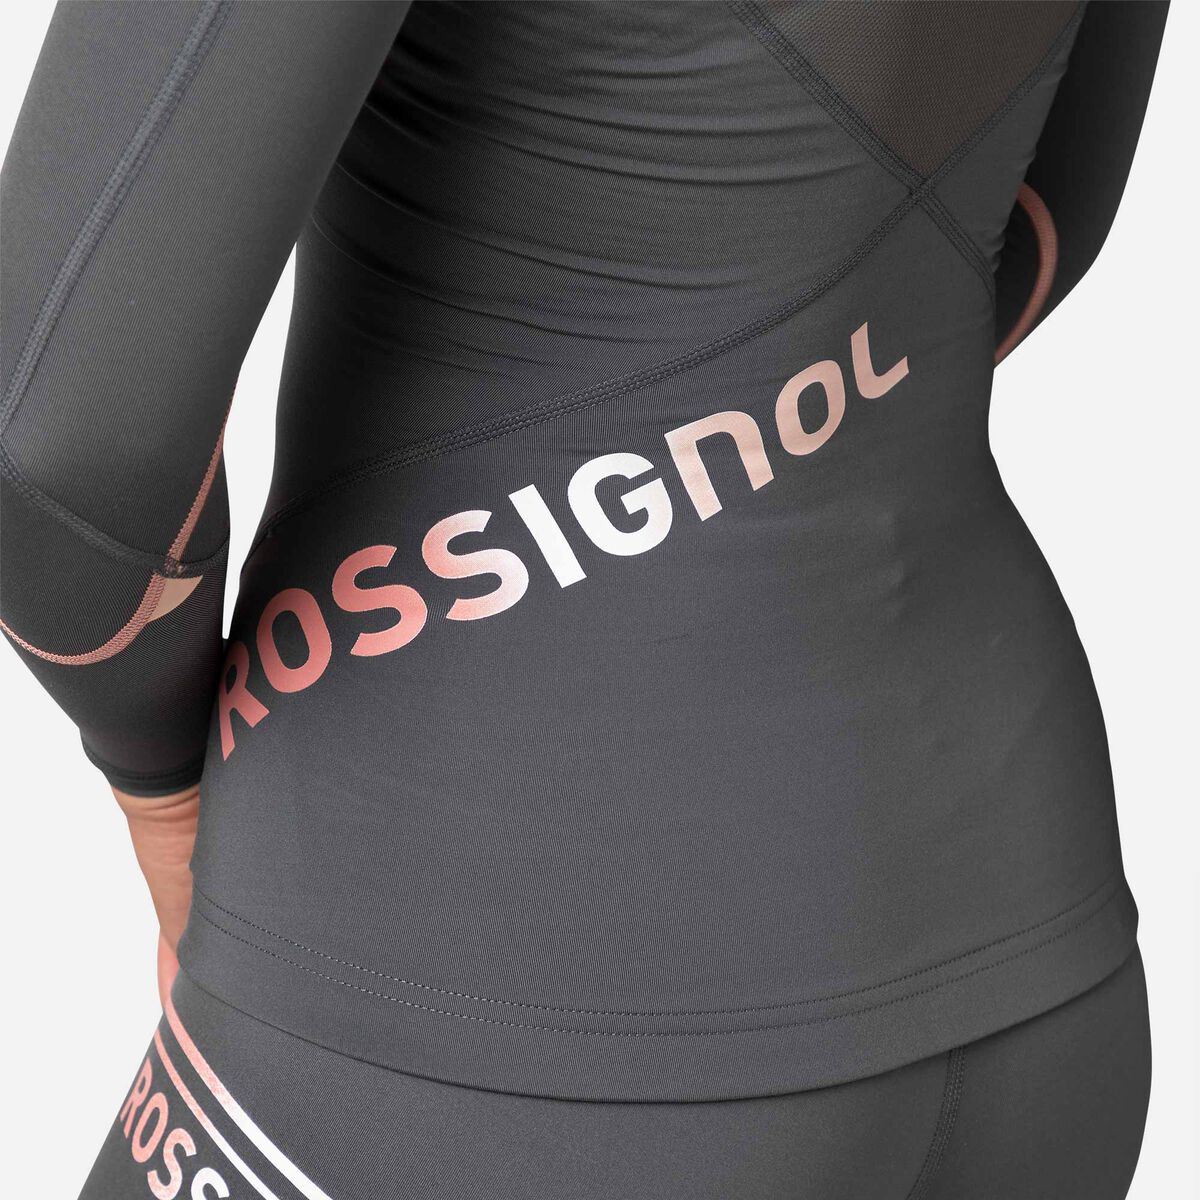 Rossignol Women's Infini Compression Race Top grey